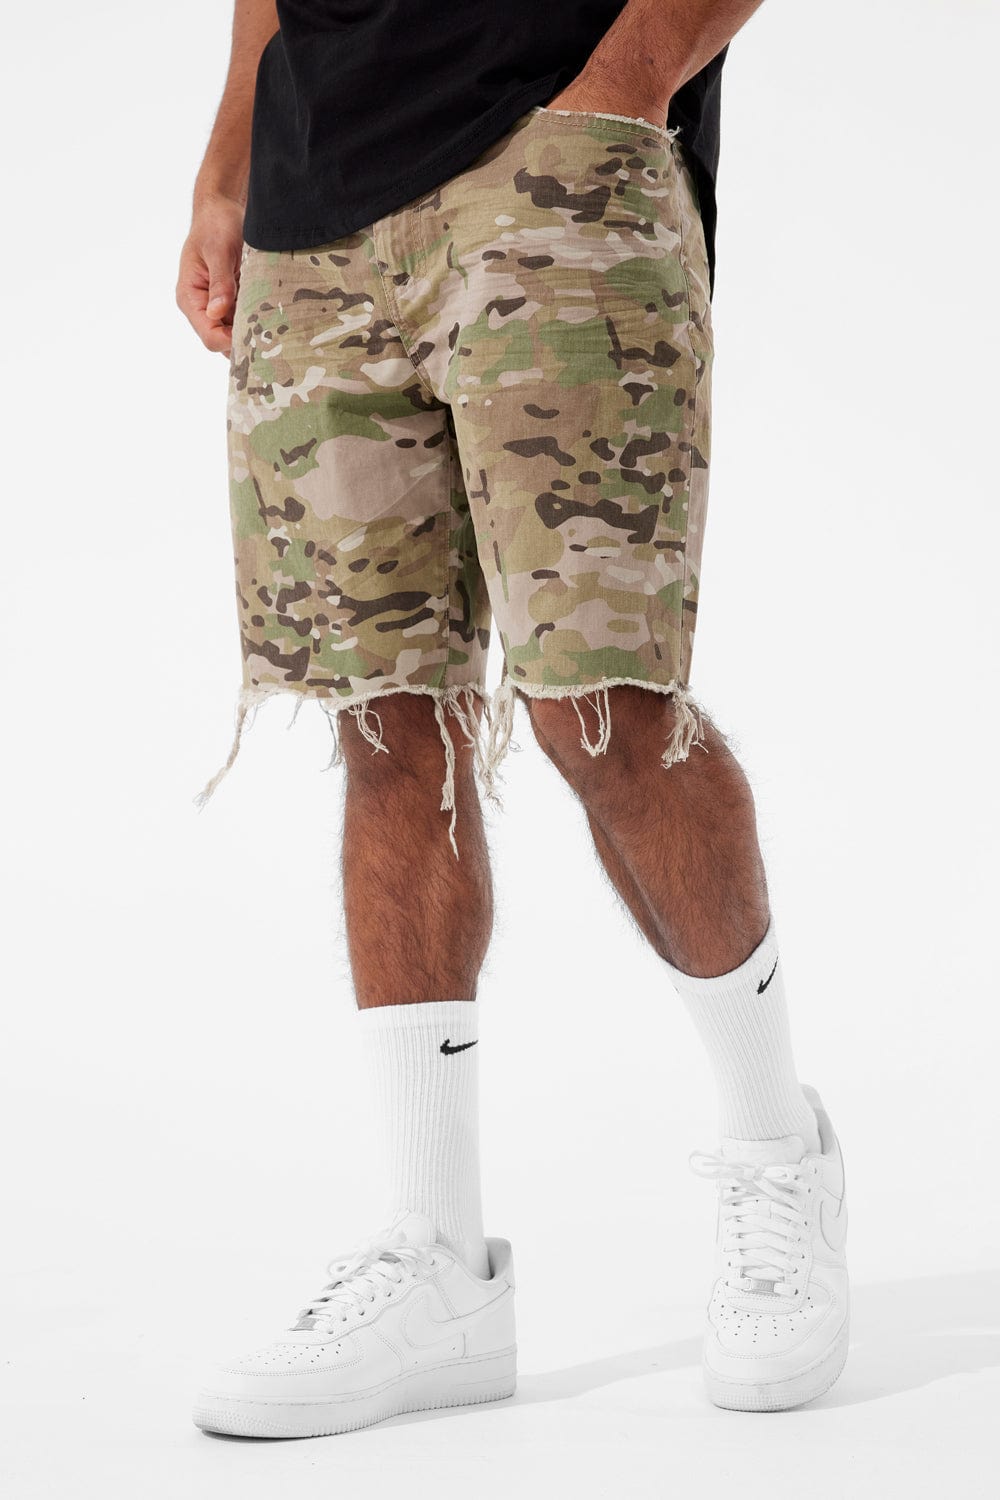 Jordan Craig Retro - Infantry Twill Shorts (Camo 2.0) 30 / Camo 2.0